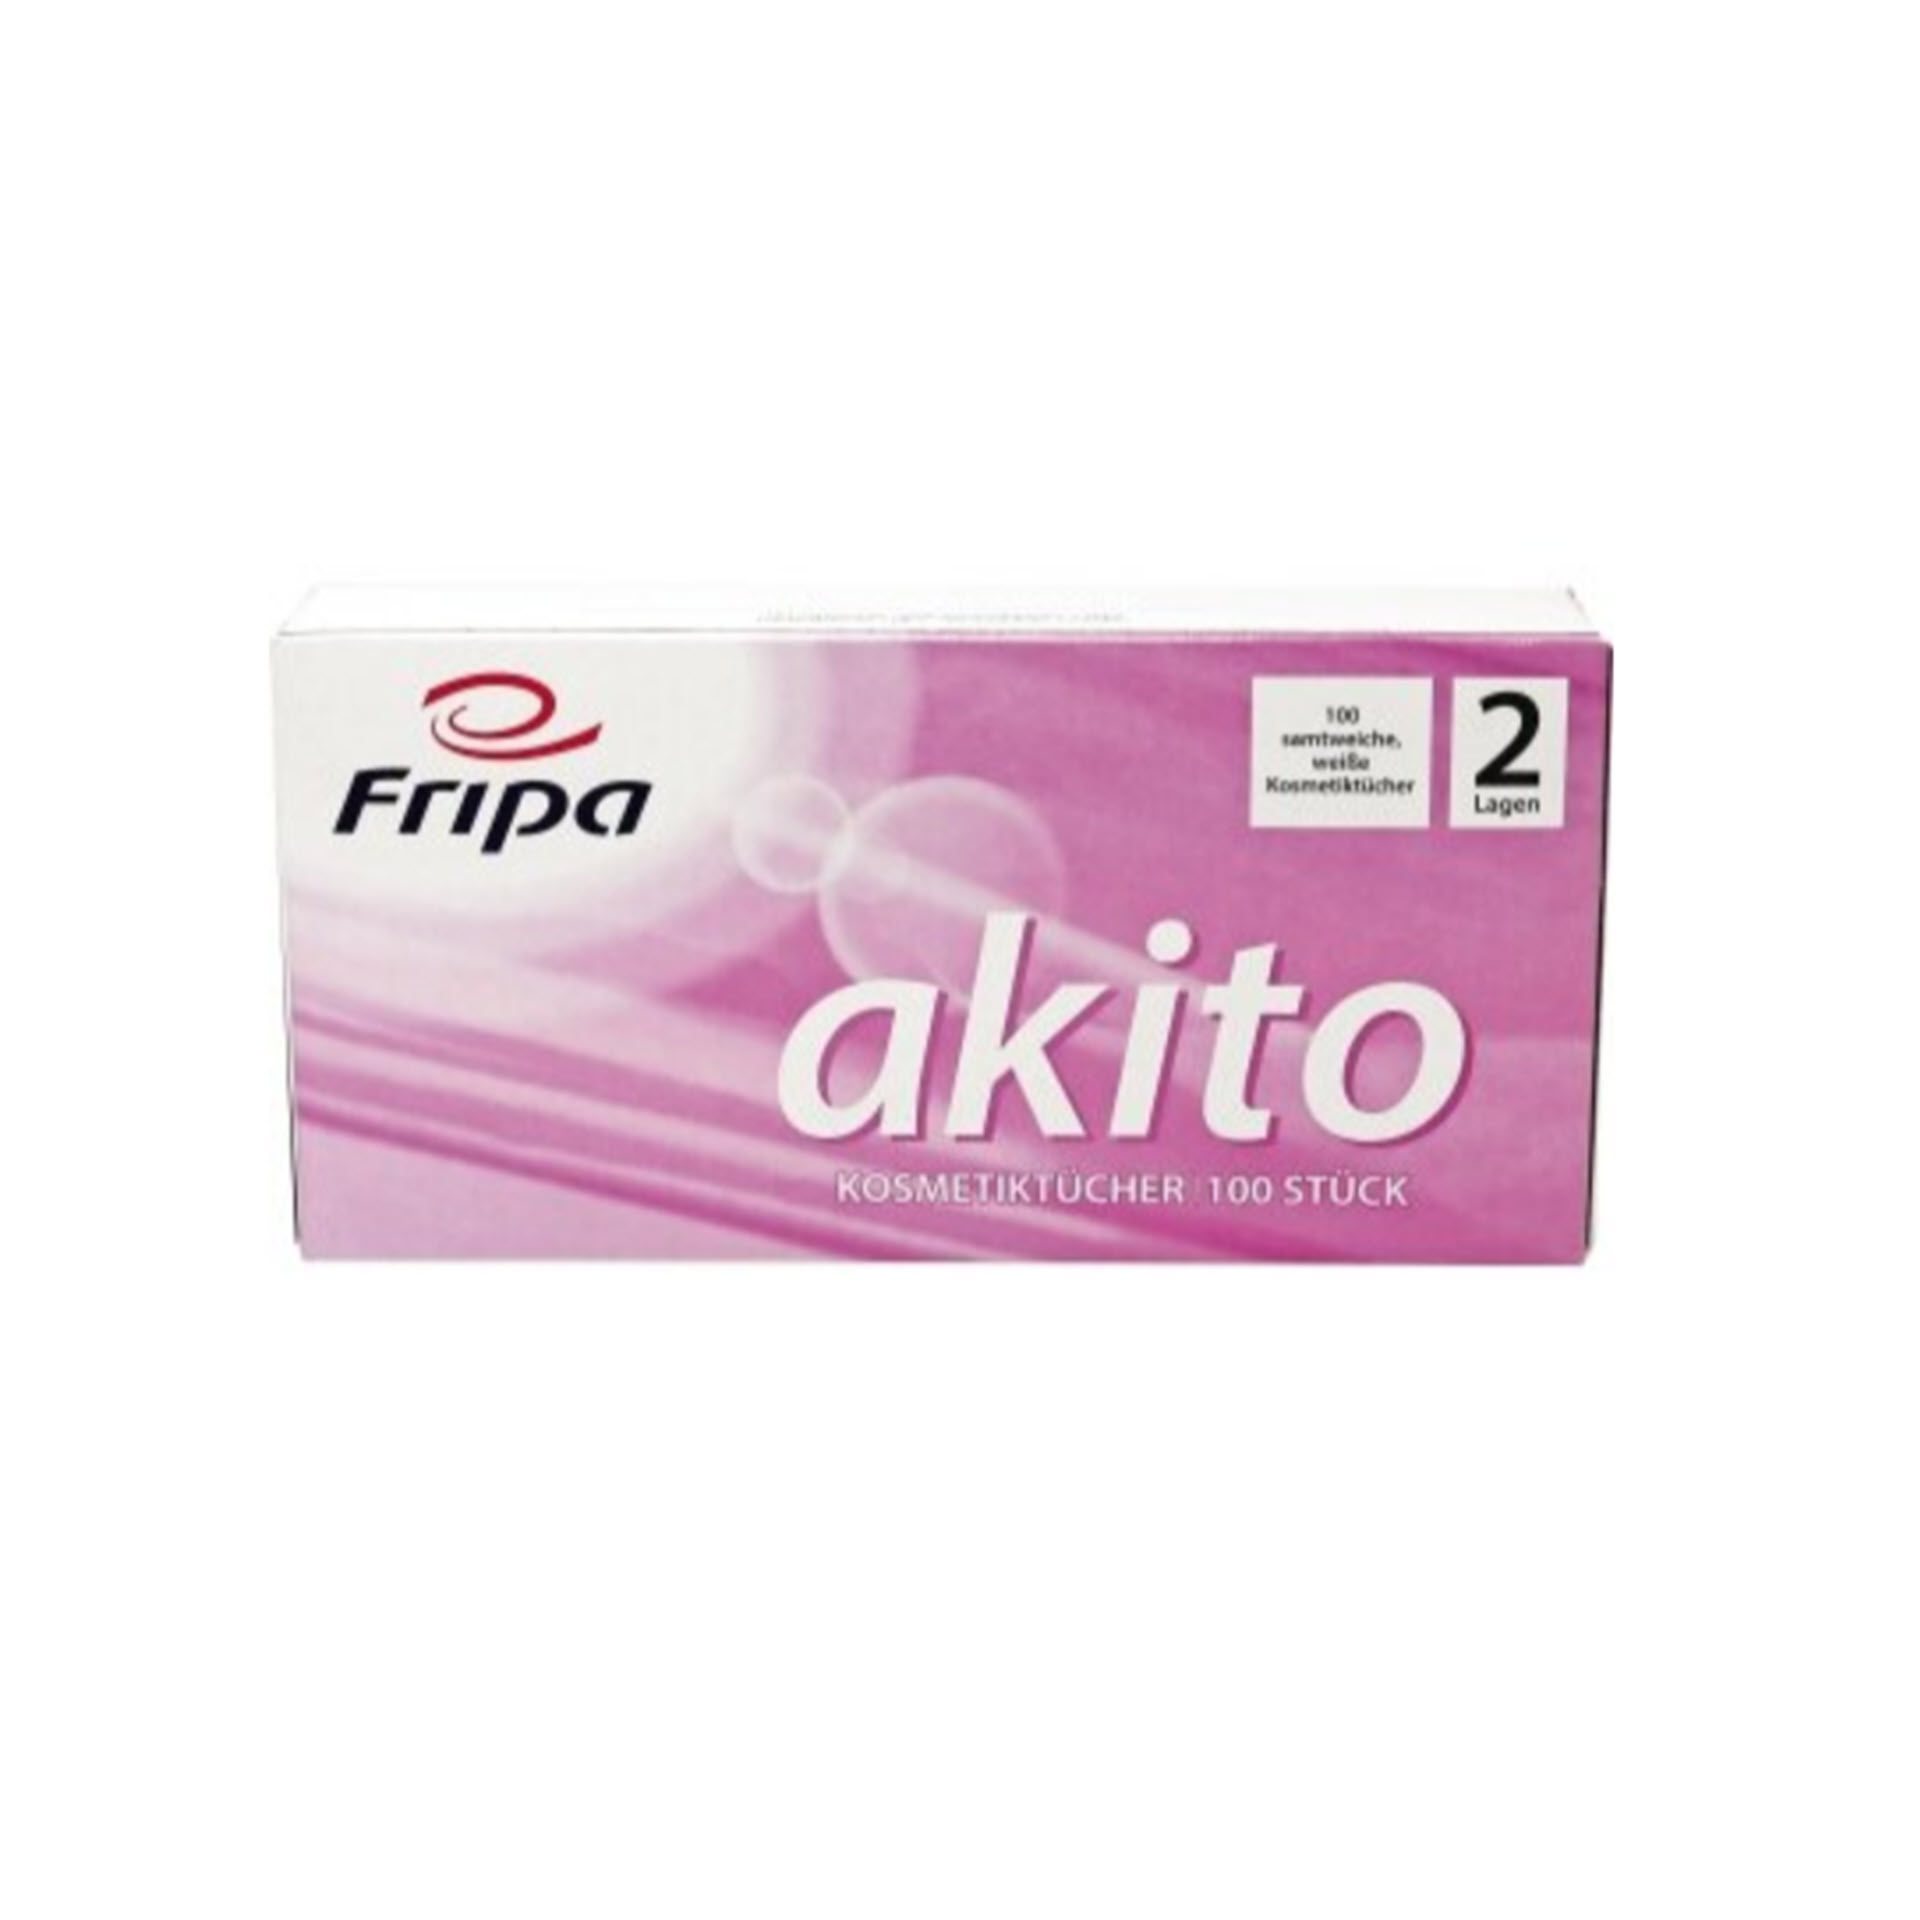 Fripa akito Kosmetiktücher 6011107 21x20cm 2-lagig weiß - 1 Karton mit 40 Pappspendern